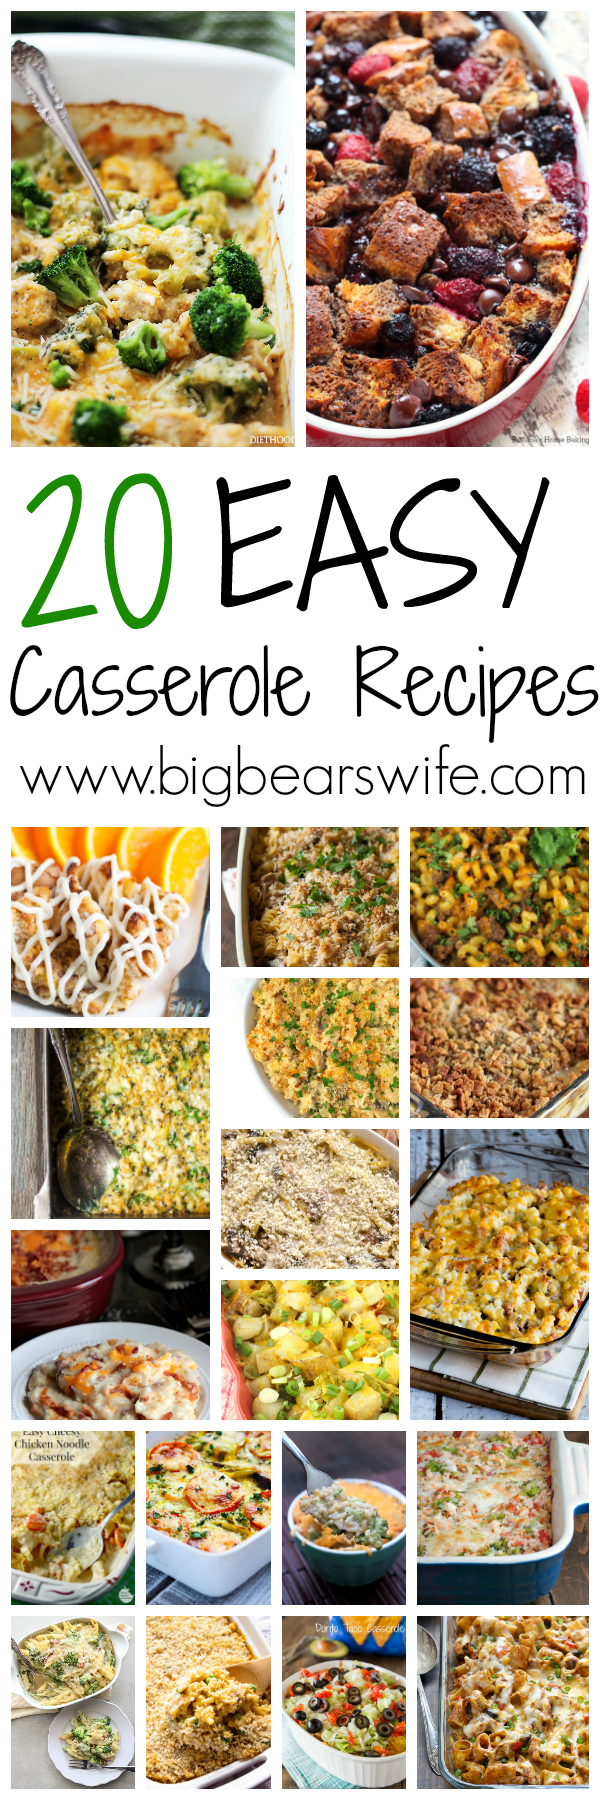 20 EASY Casserole Recipes